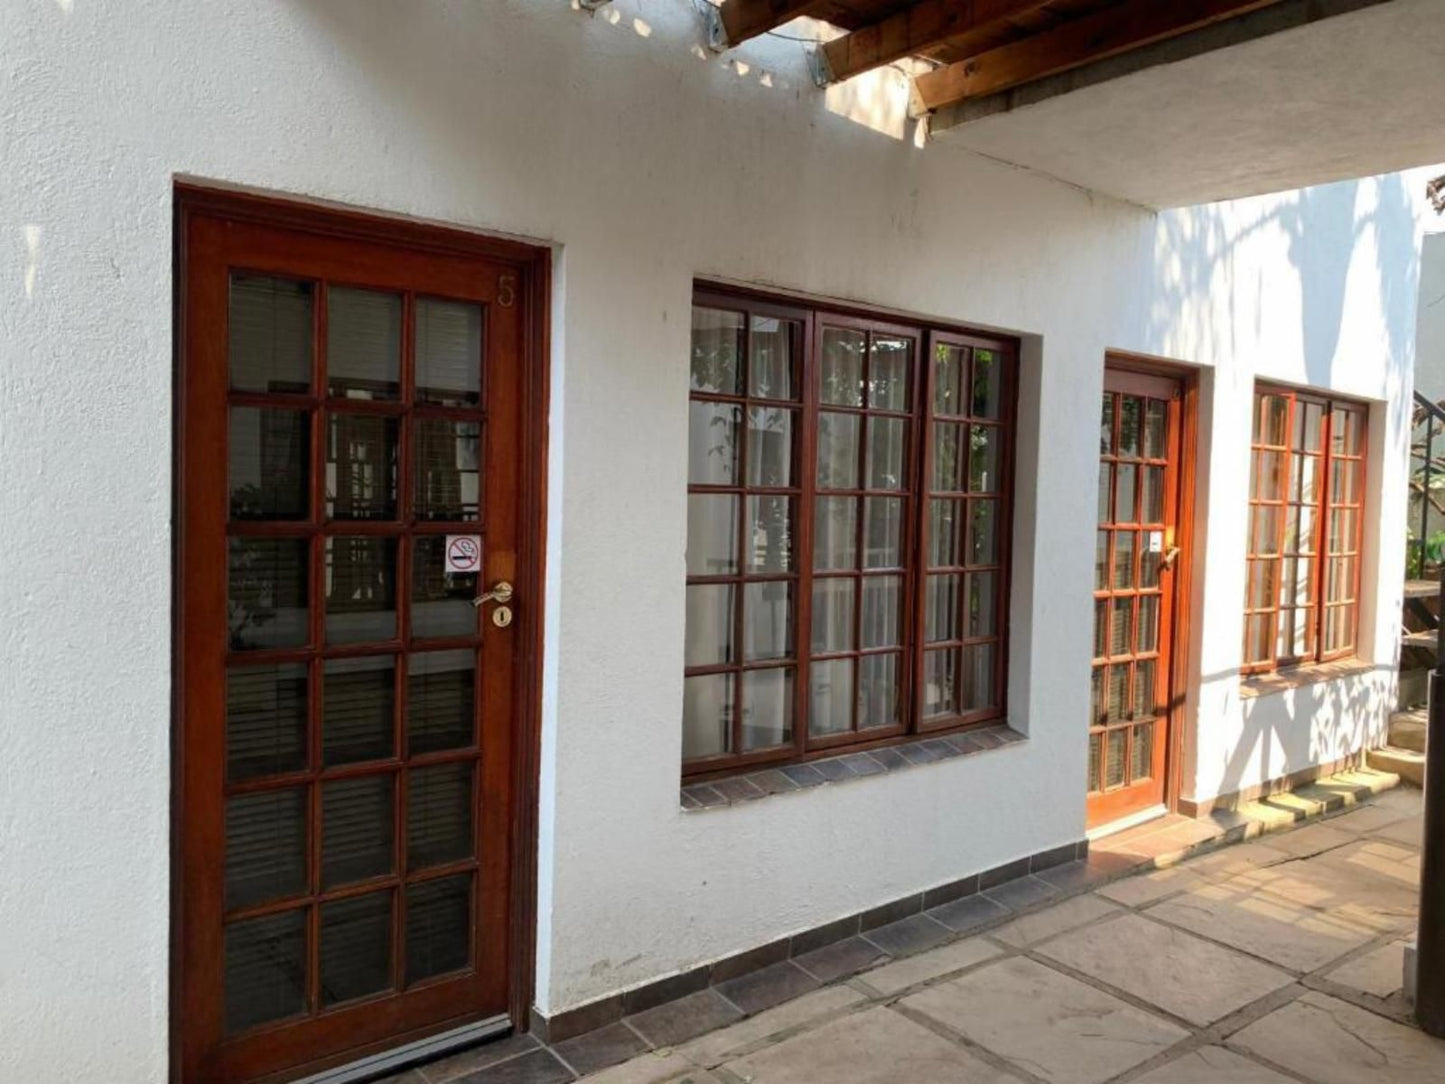 Pensao Guest Lodge Sonheuwel Nelspruit Mpumalanga South Africa Door, Architecture, House, Building